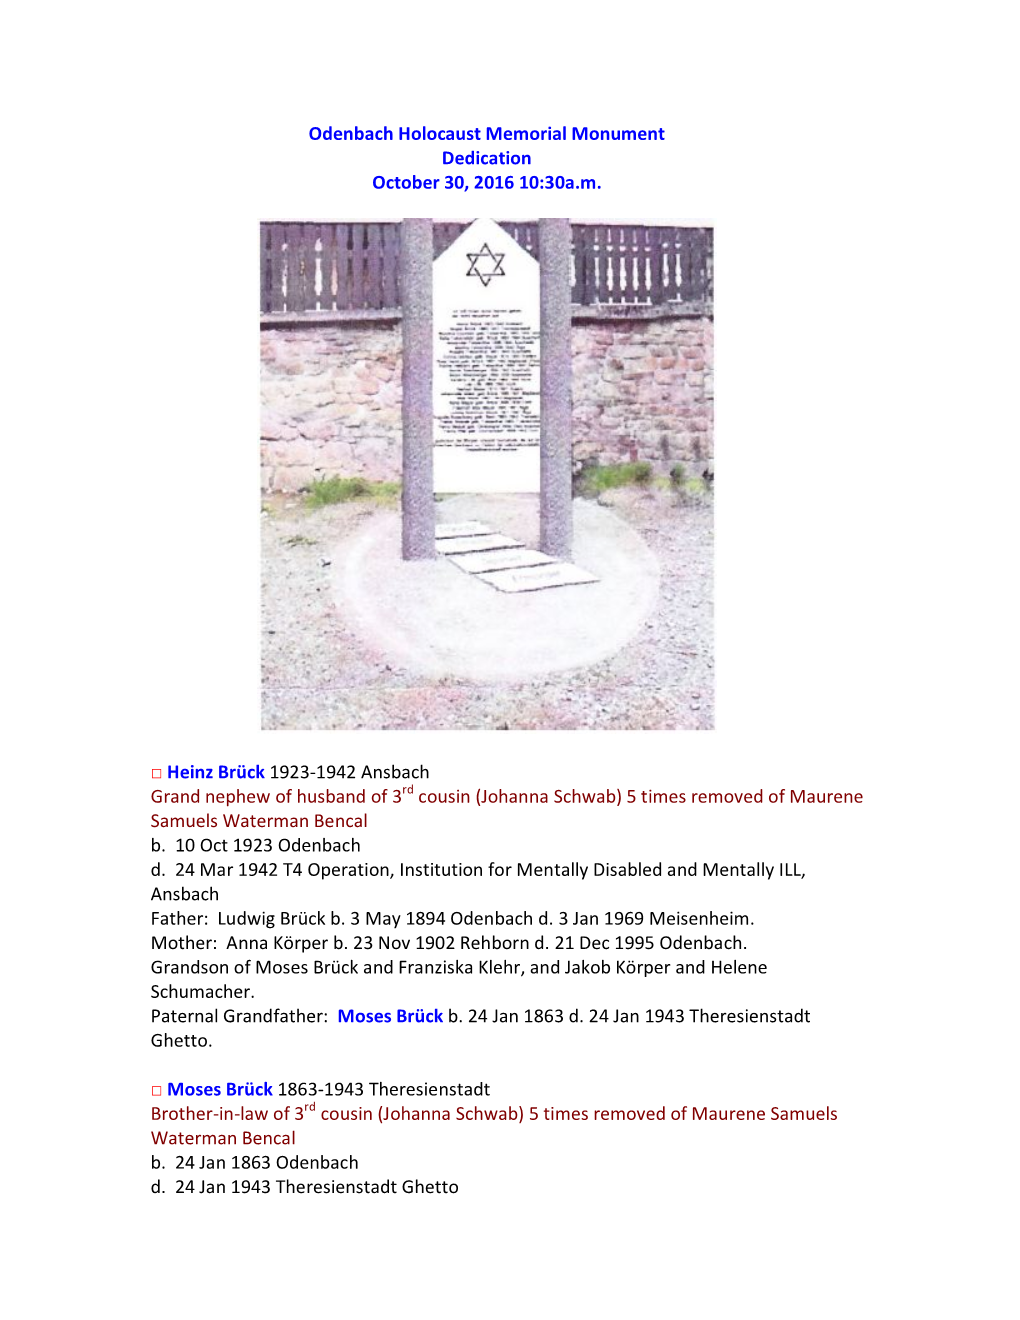 Odenbach Holocaust Memorial Monument Dedication October 30, 2016 10:30A.M